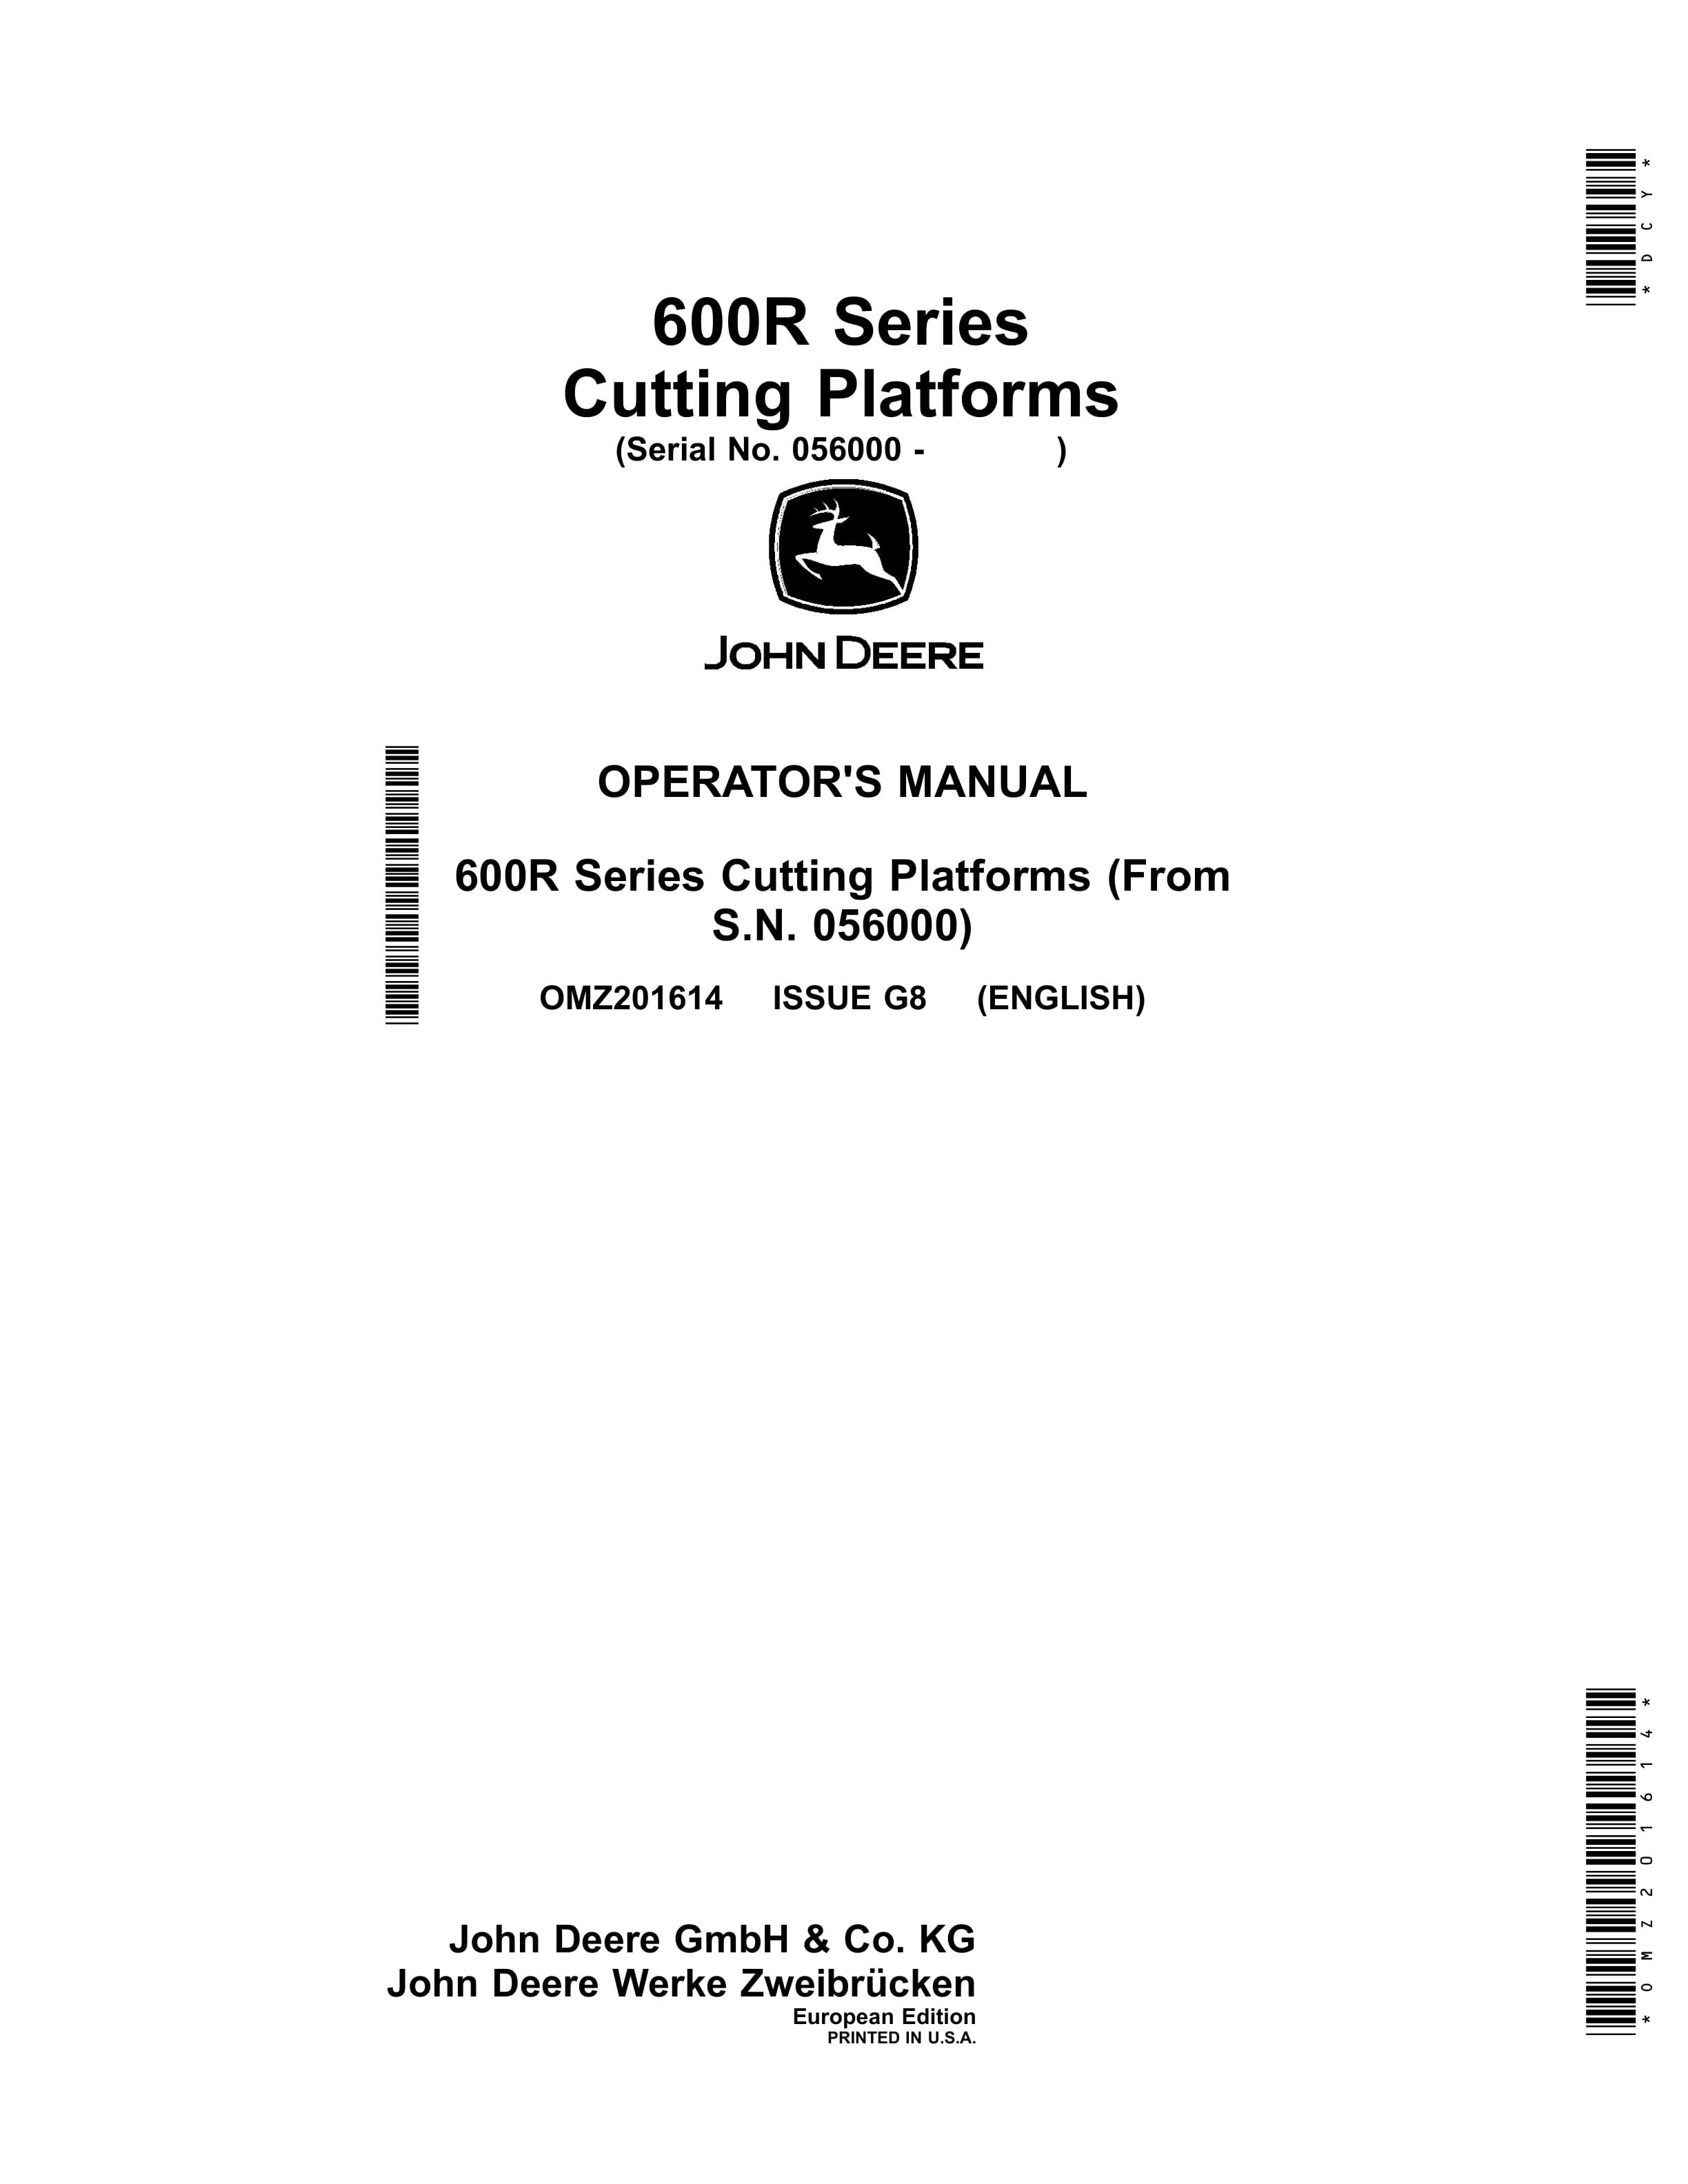 John Deere 600R Series Cutting Platform Operator Manual OMZ201614 1